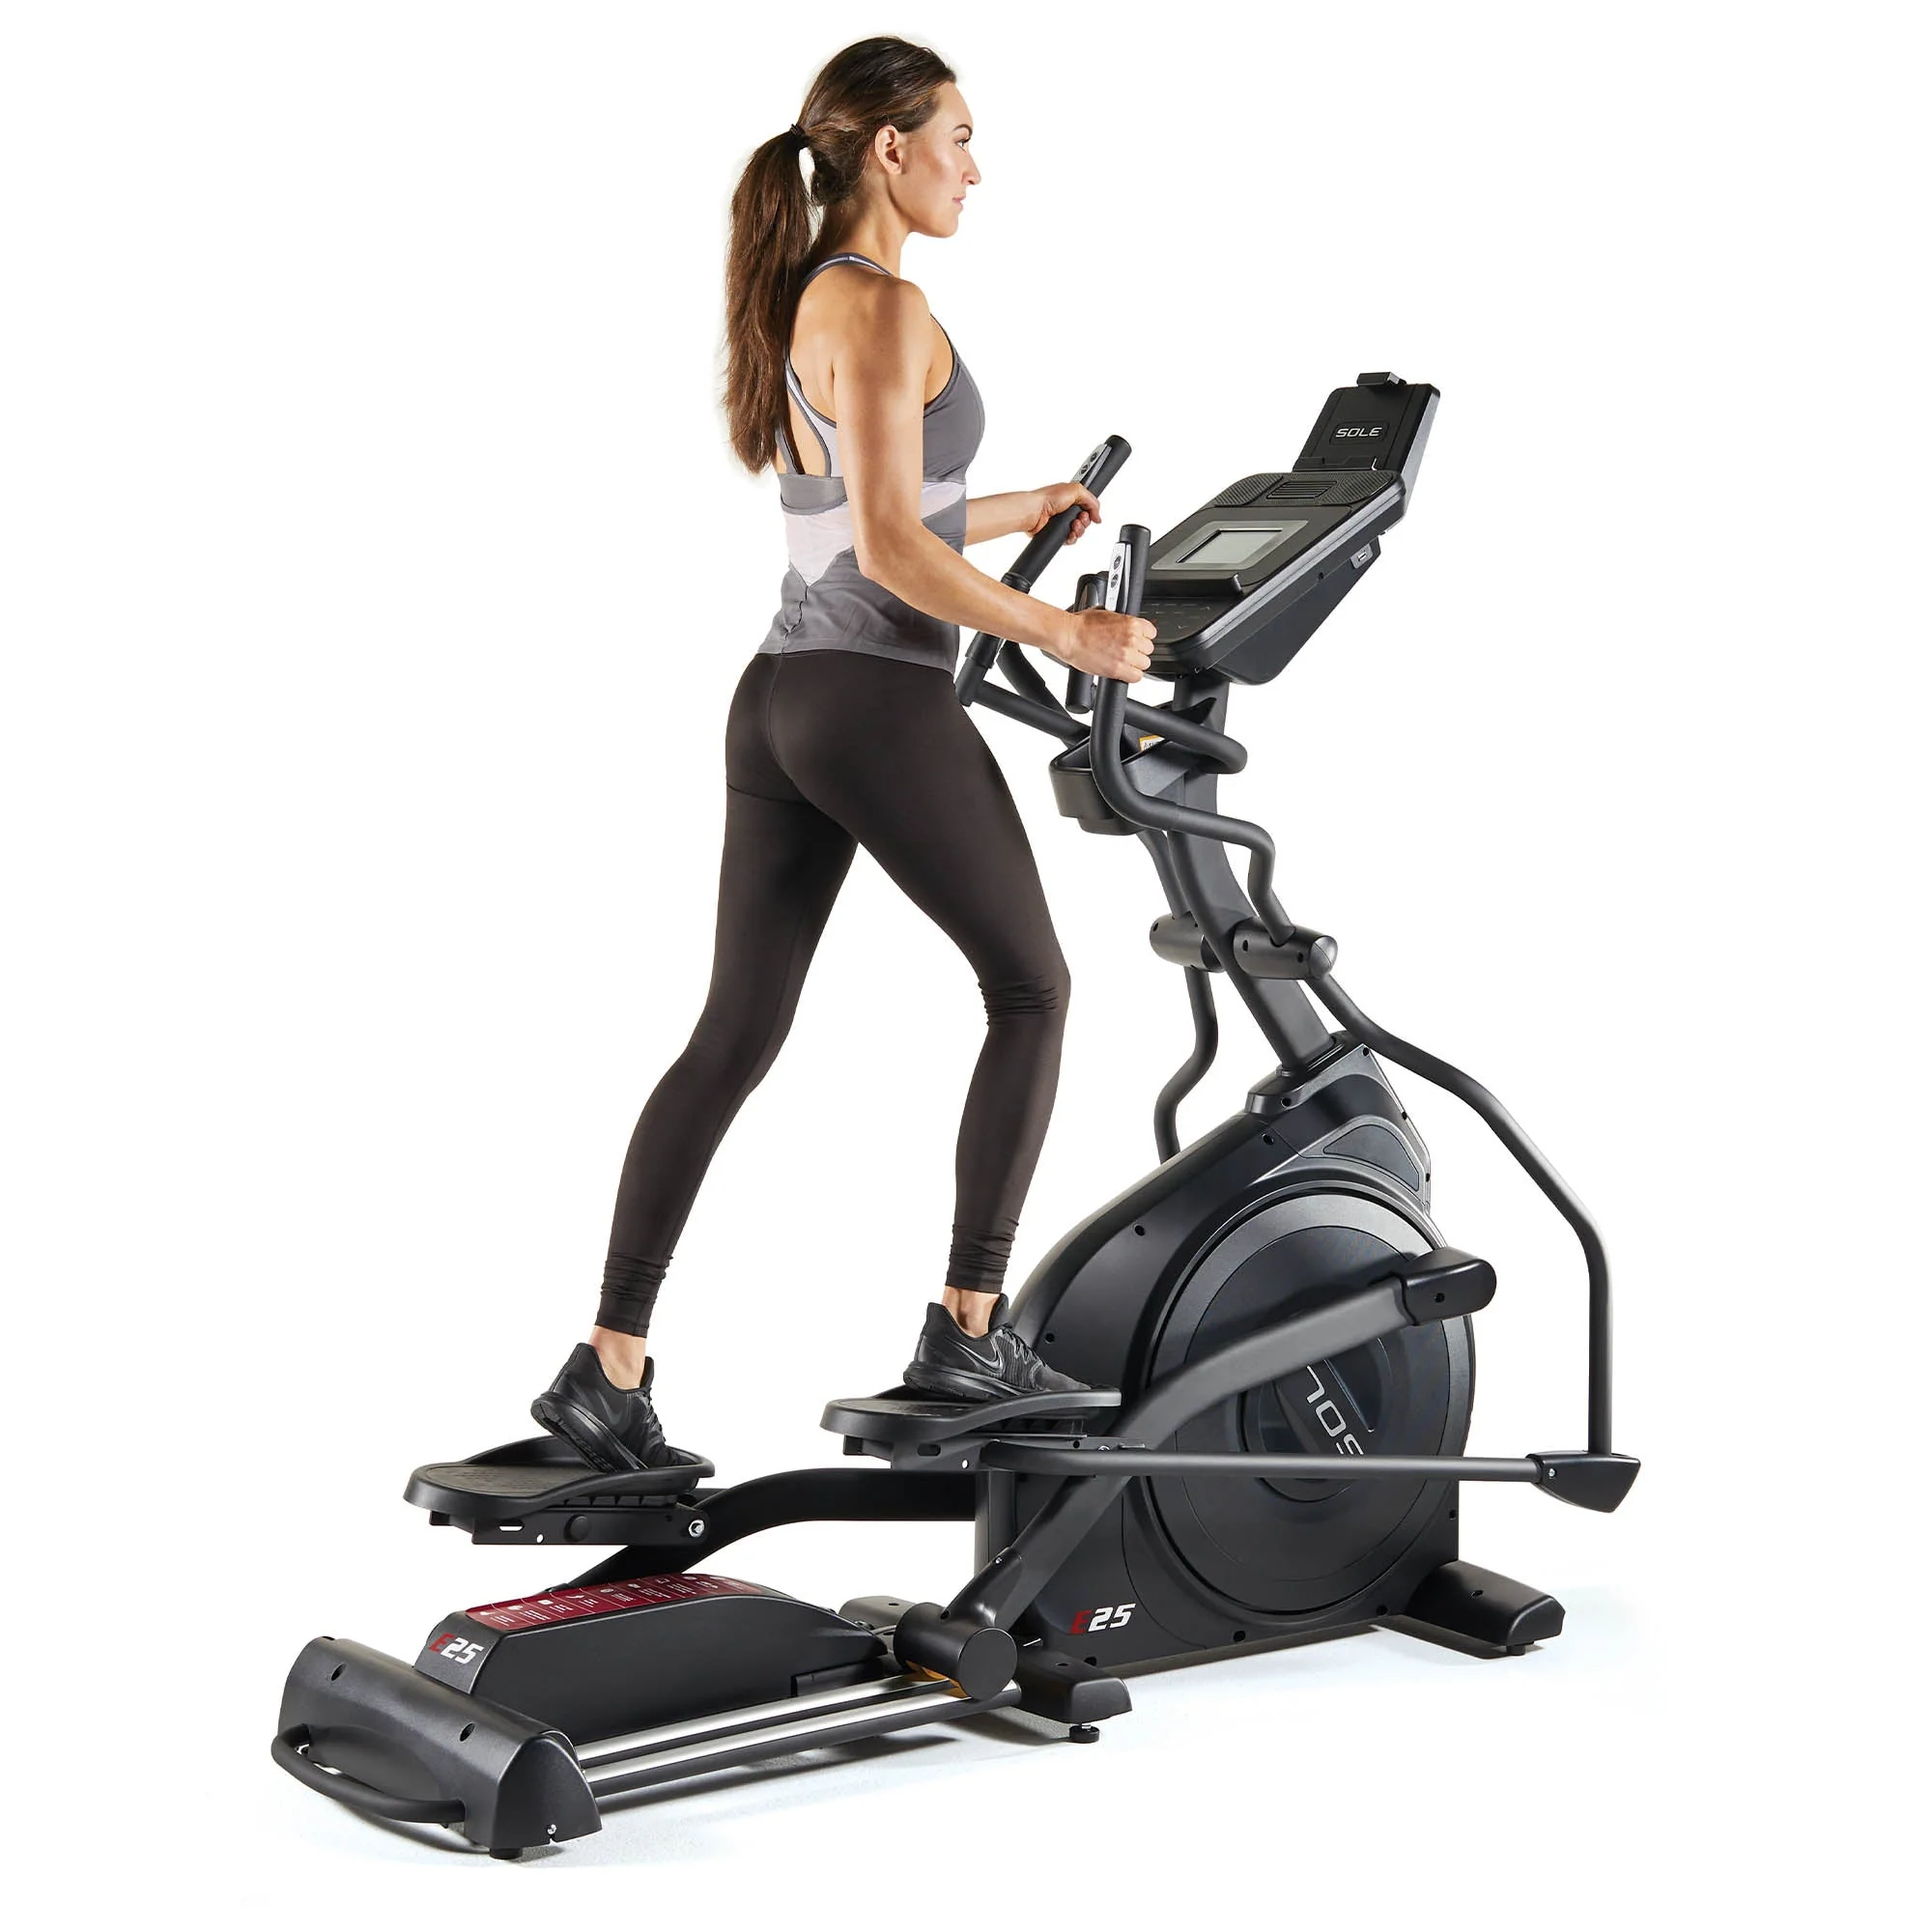 Sole Fitness E25 Elliptical Cross Trainer – Fitness equipment